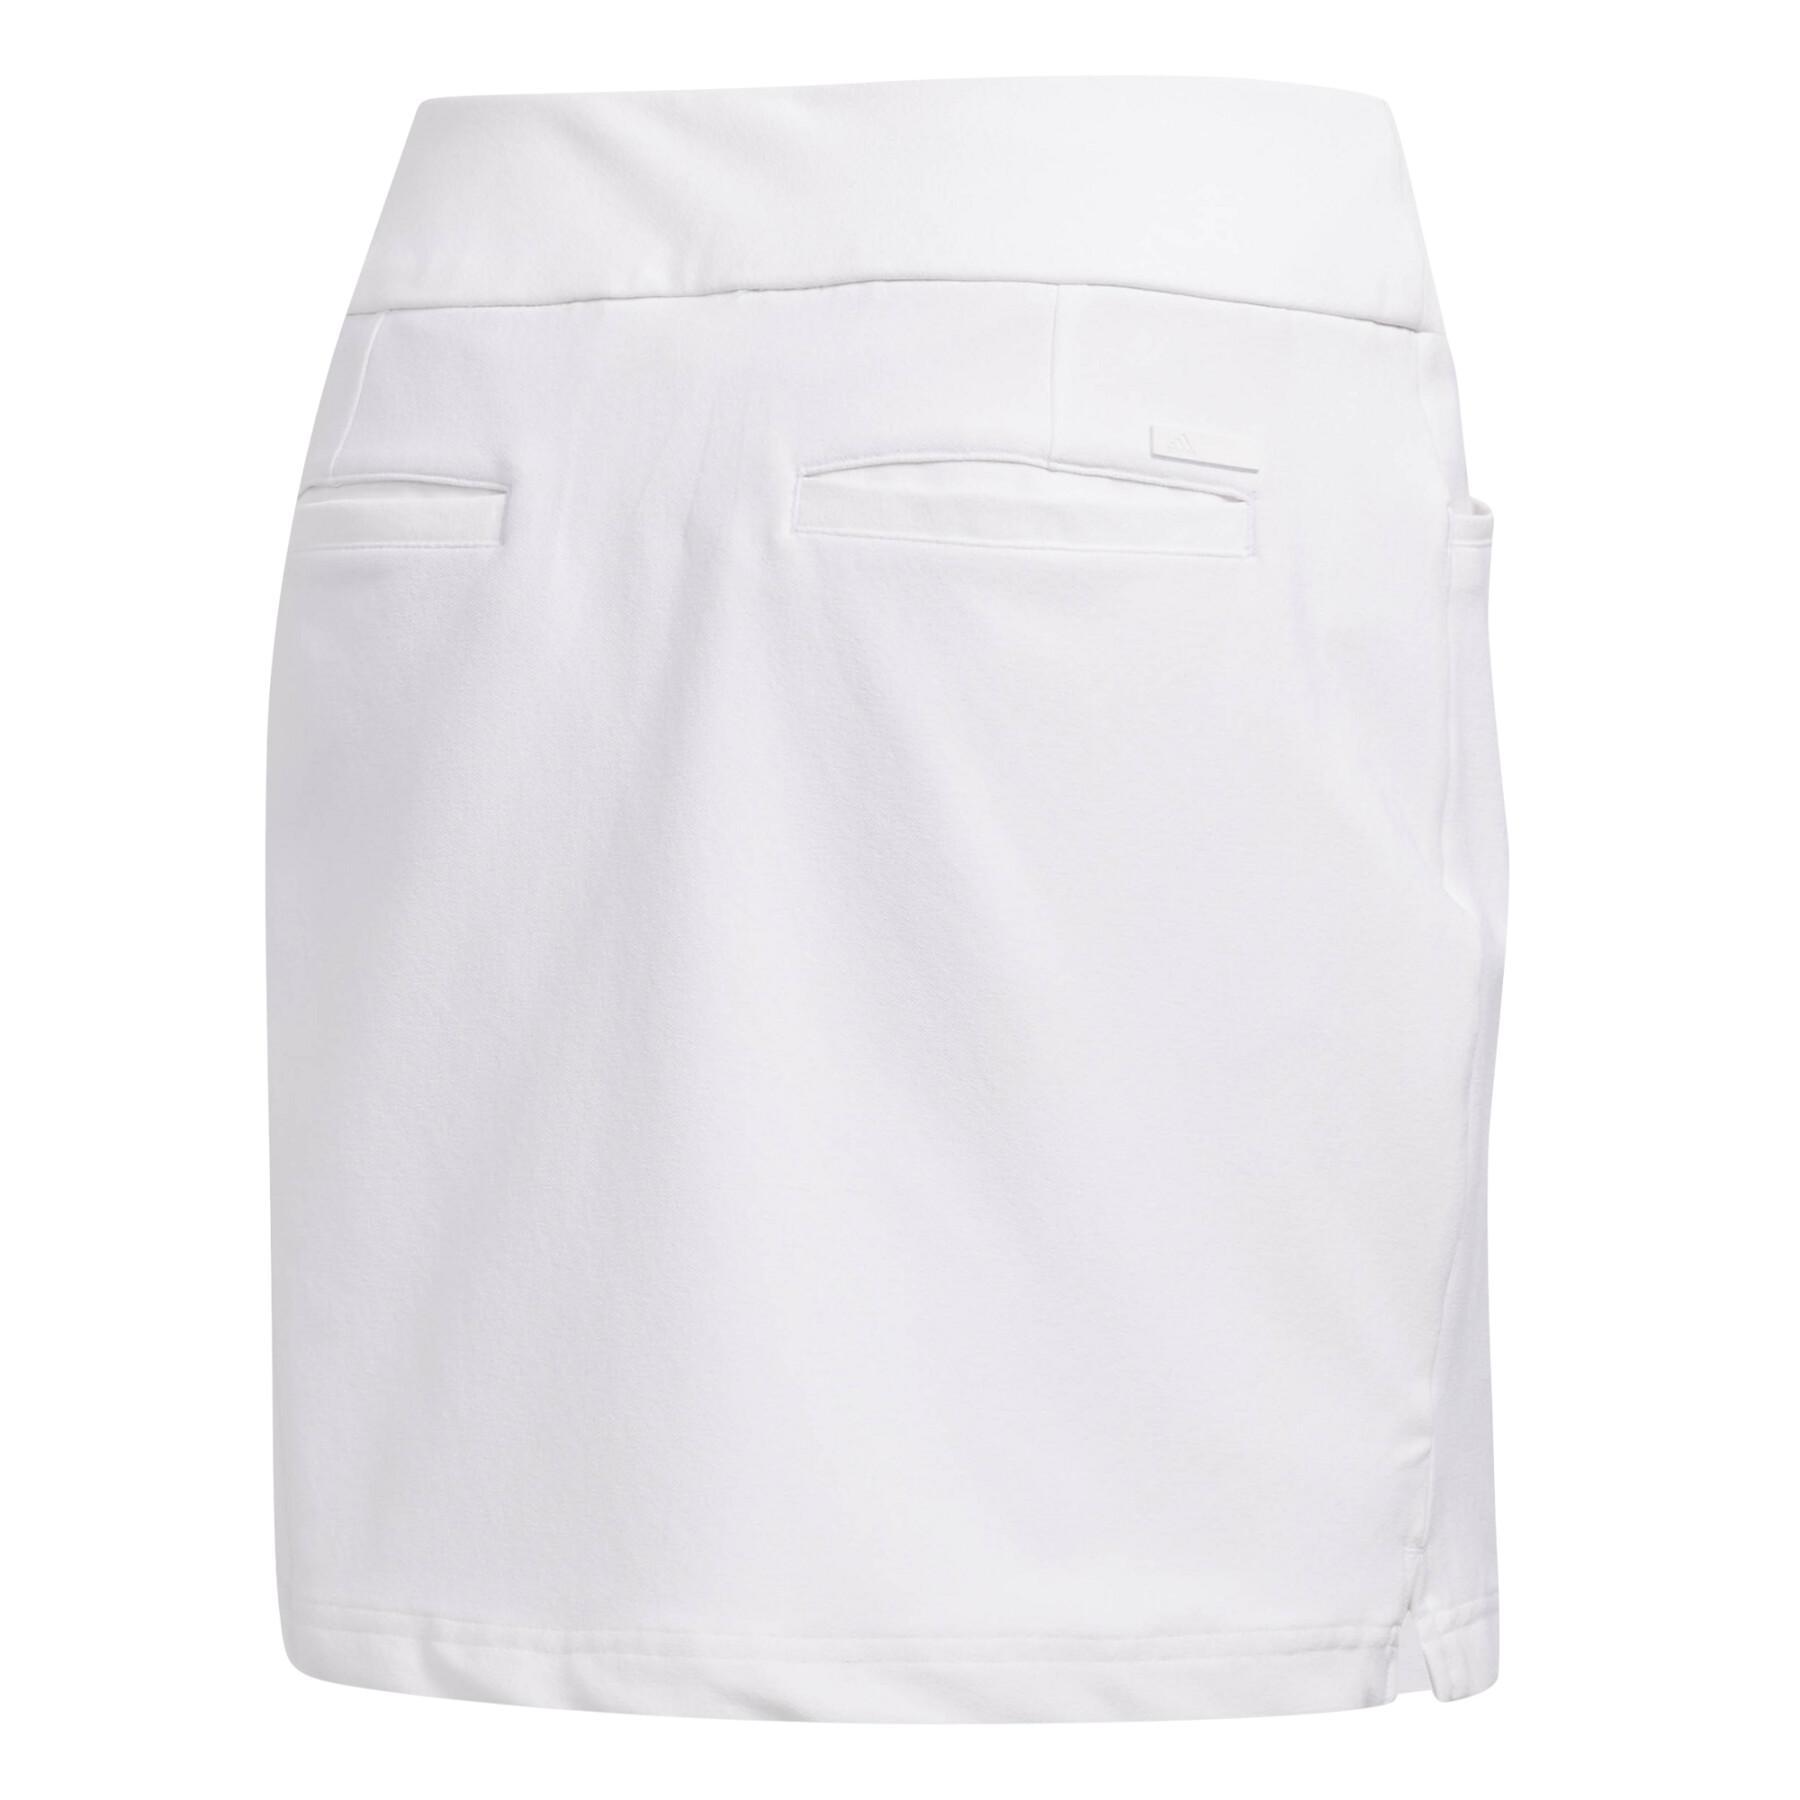 Women's short skirt adidas Ultimate Adistar